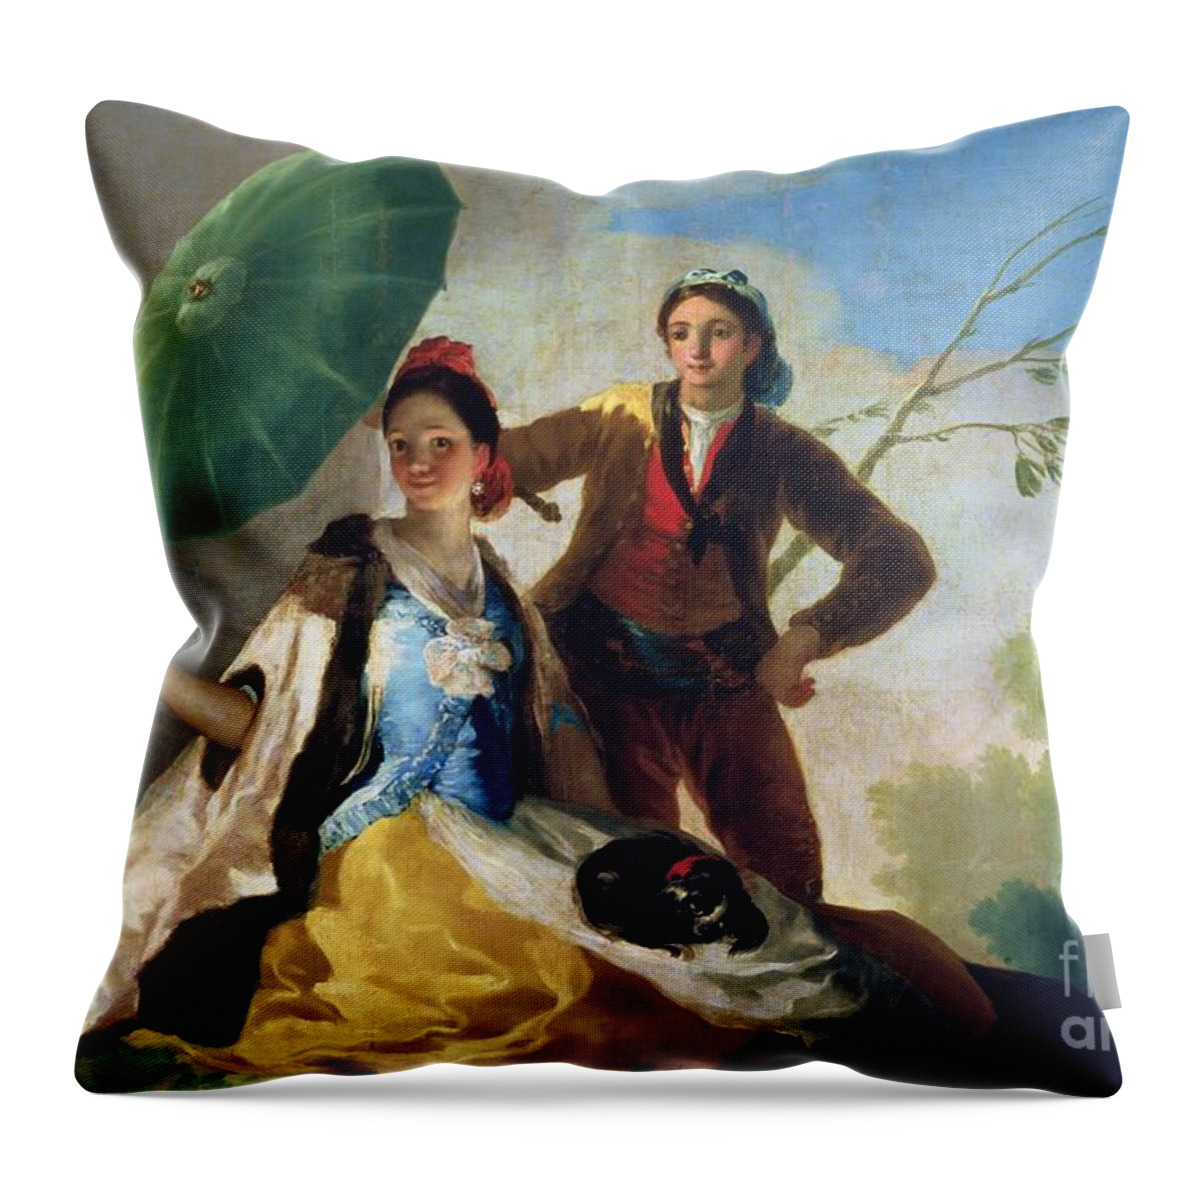 Parasol Goya Throw Pillow featuring the painting The Parasol by Goya by Goya